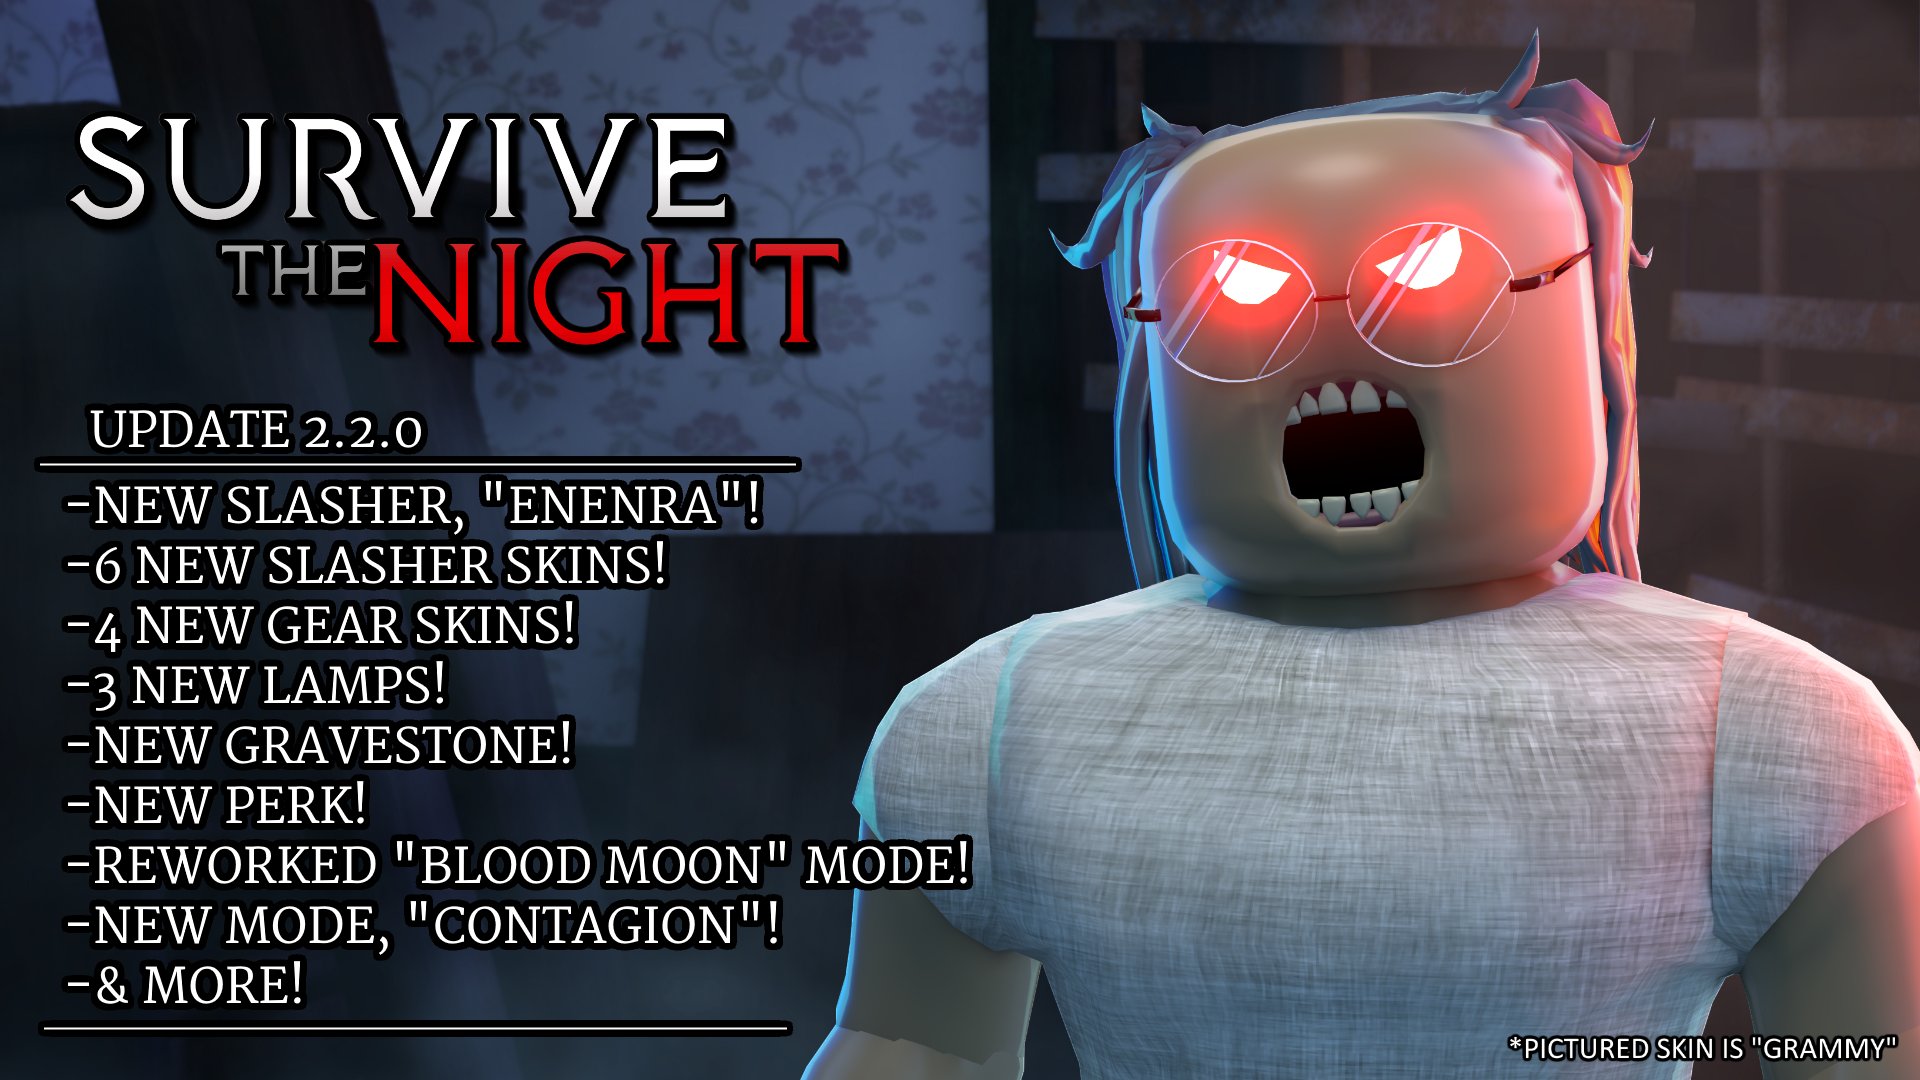 Aurek Team on X: Survive the Night update 1.5.0 is now live! Play